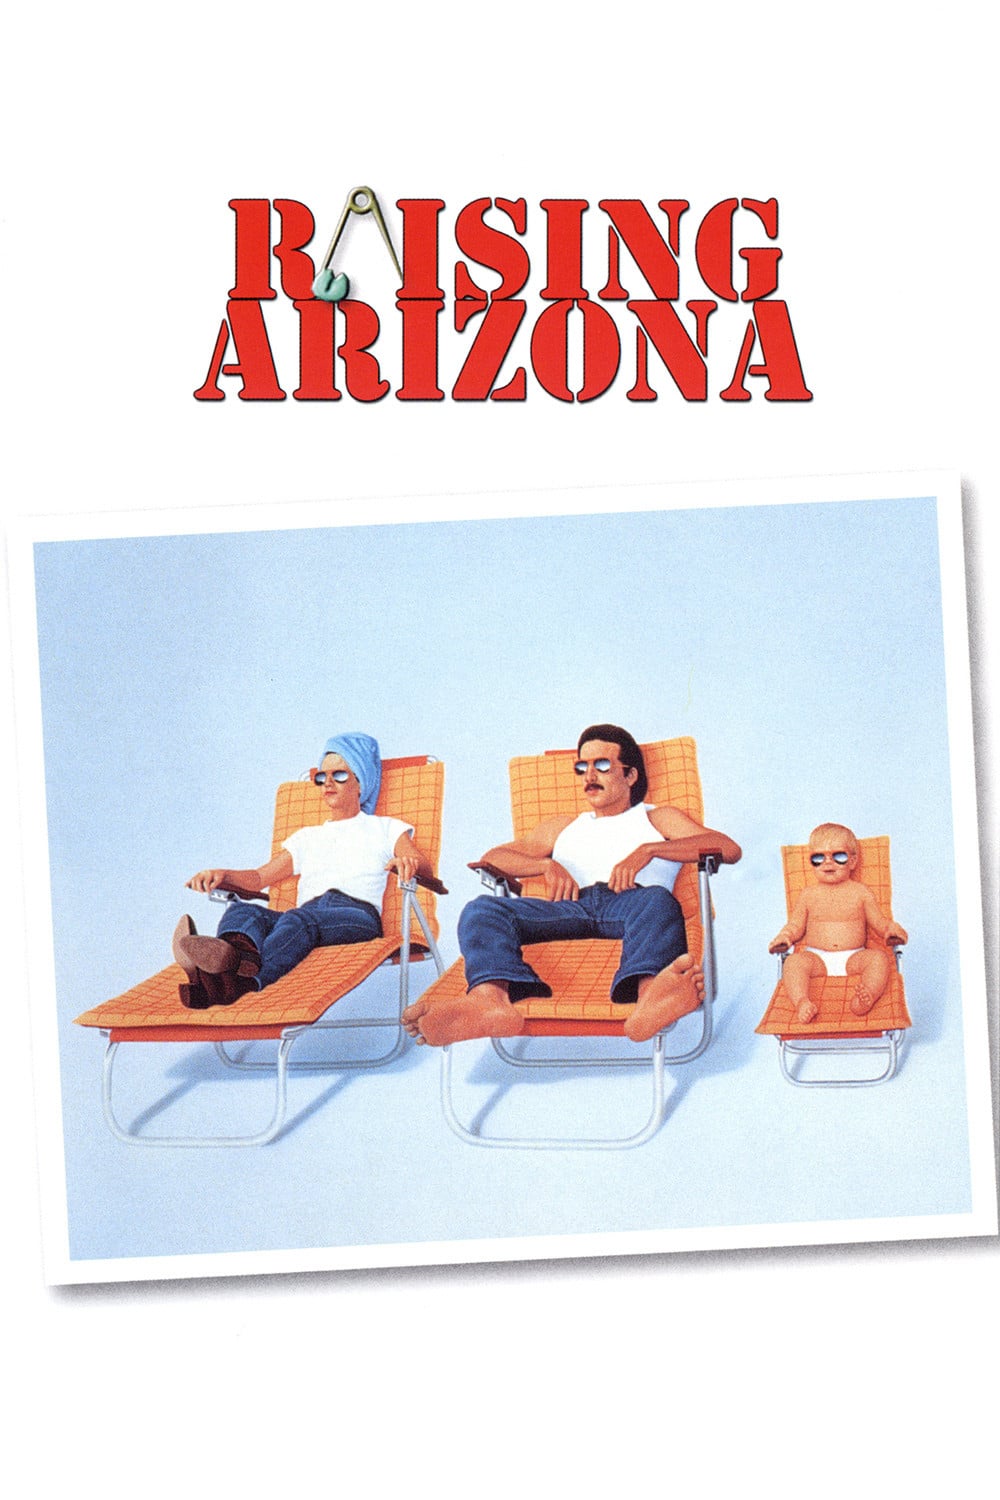 Poster for the movie "Raising Arizona"